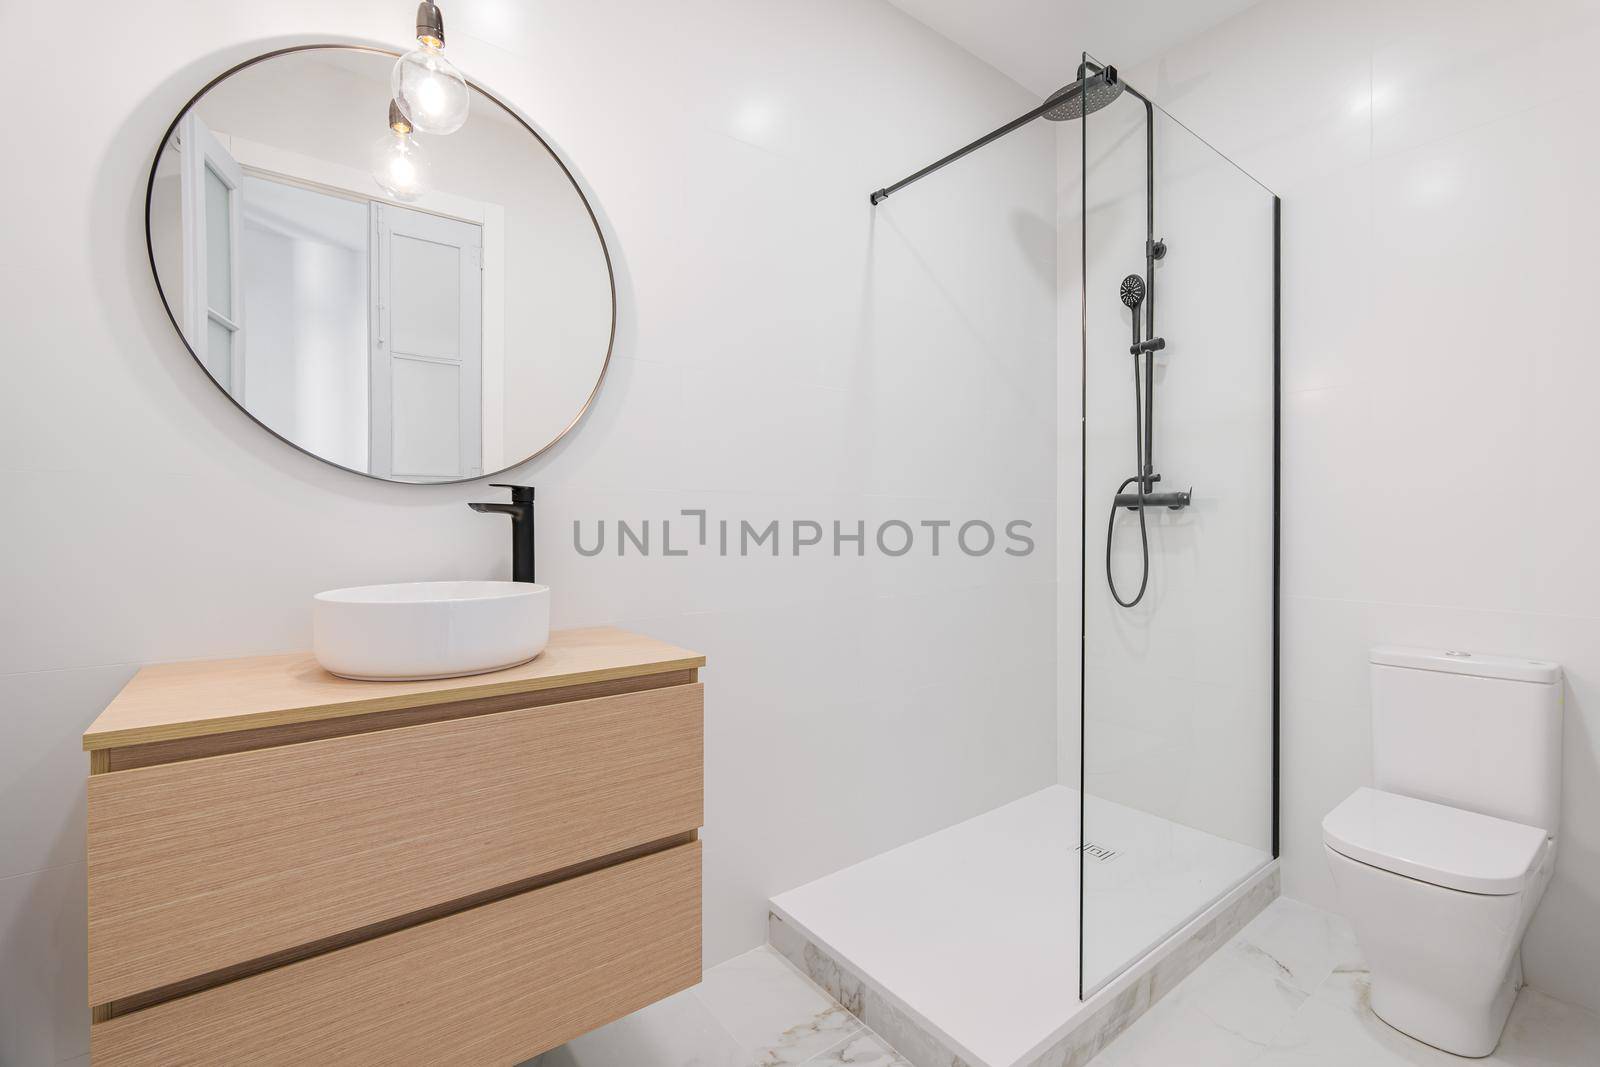 Interior of white bathroom in modern design, with shower zone, toilet, marble floor, wooden furniture and round mirror.